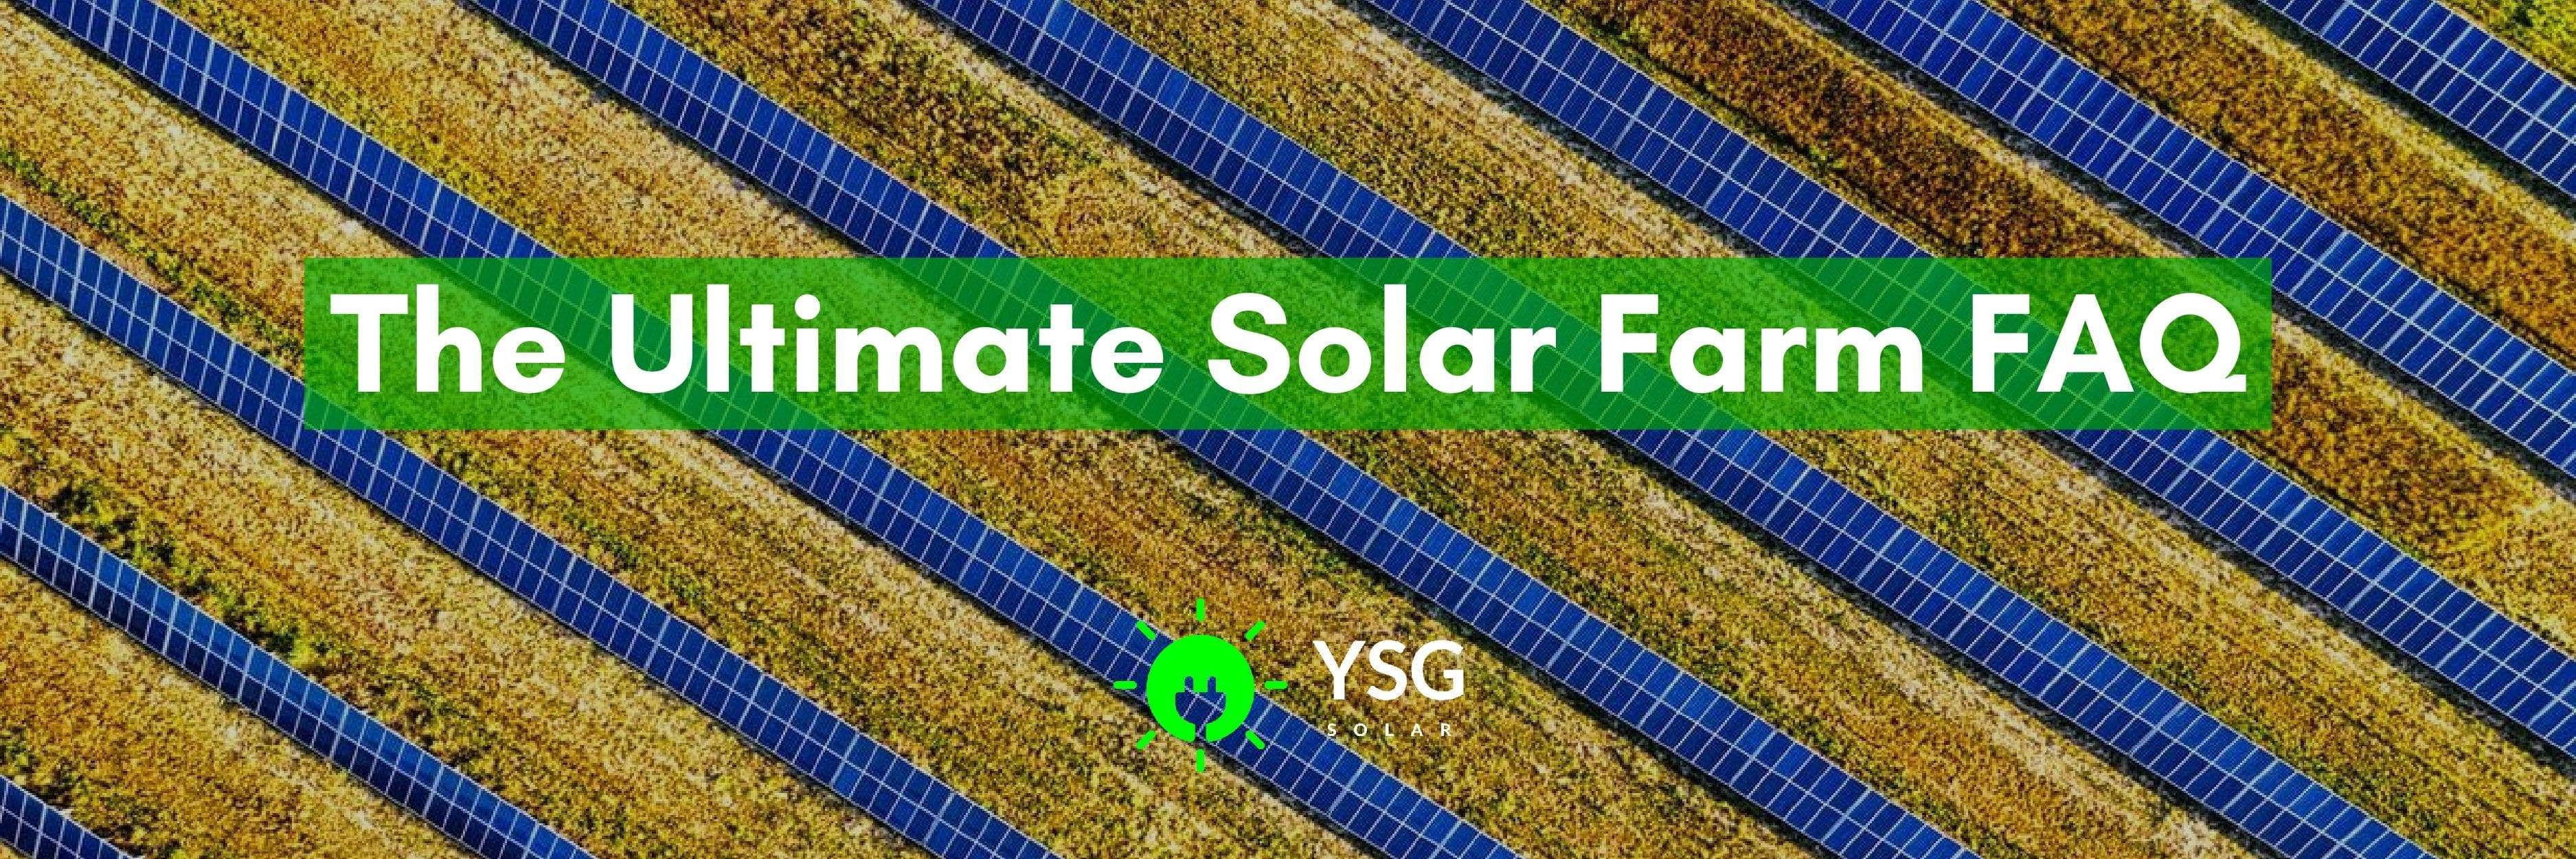 The Ultimate Solar Farm FAQ, YSG Solar